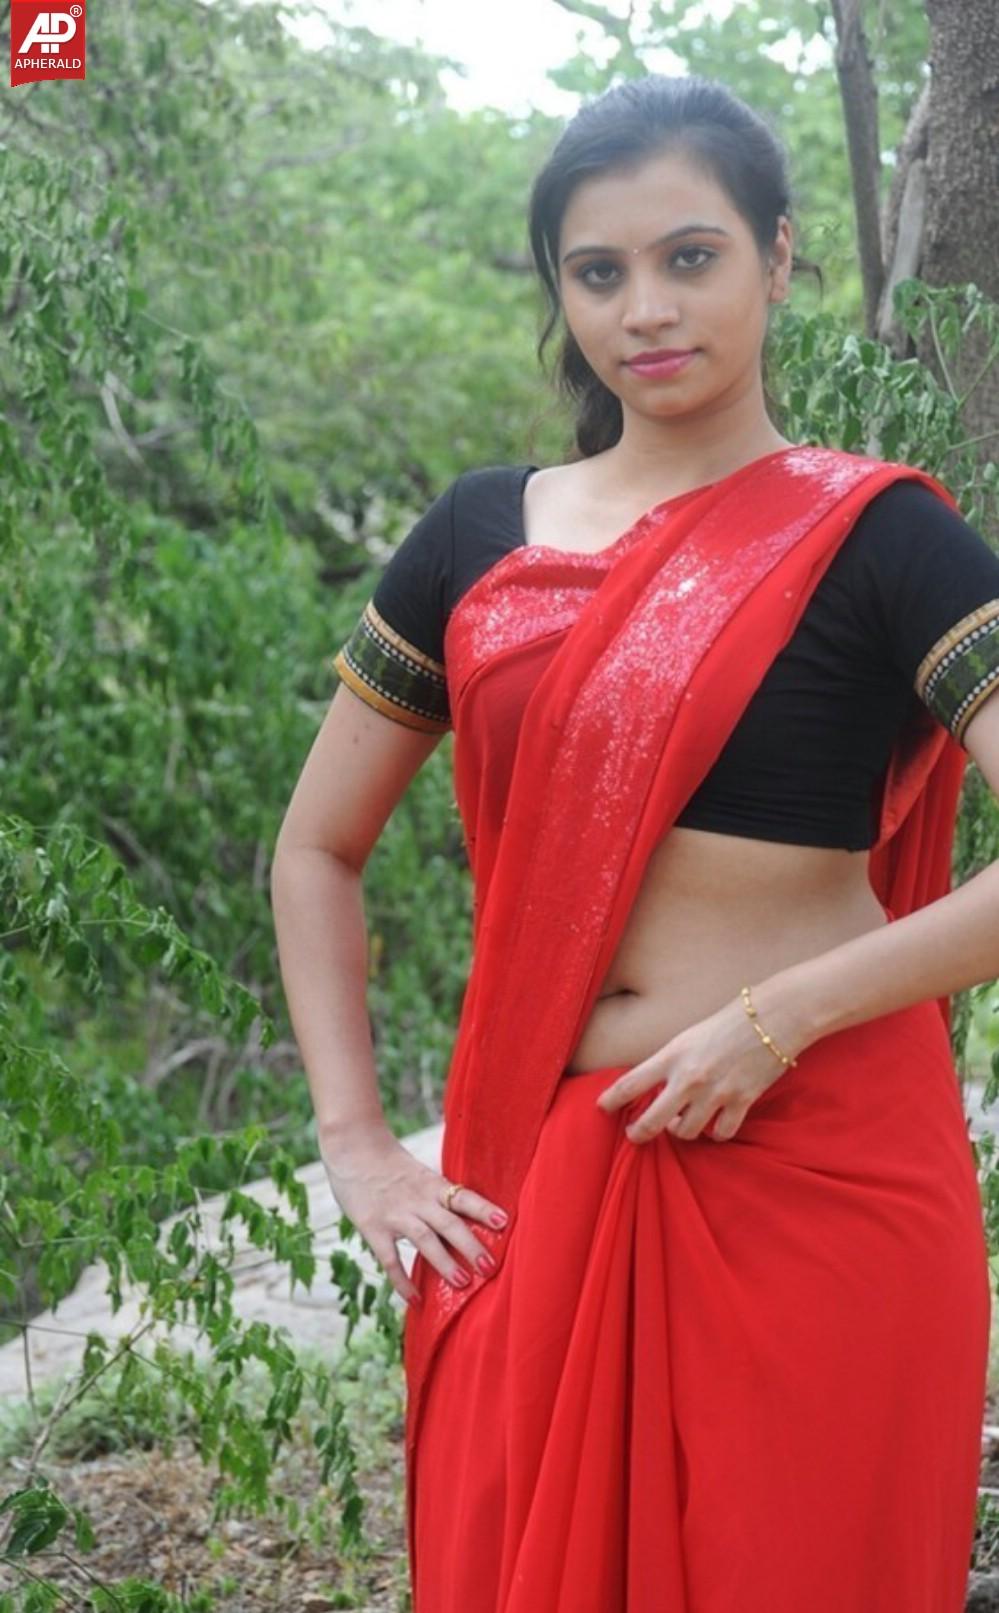 Priyanka Spicy Pics In Red Saree